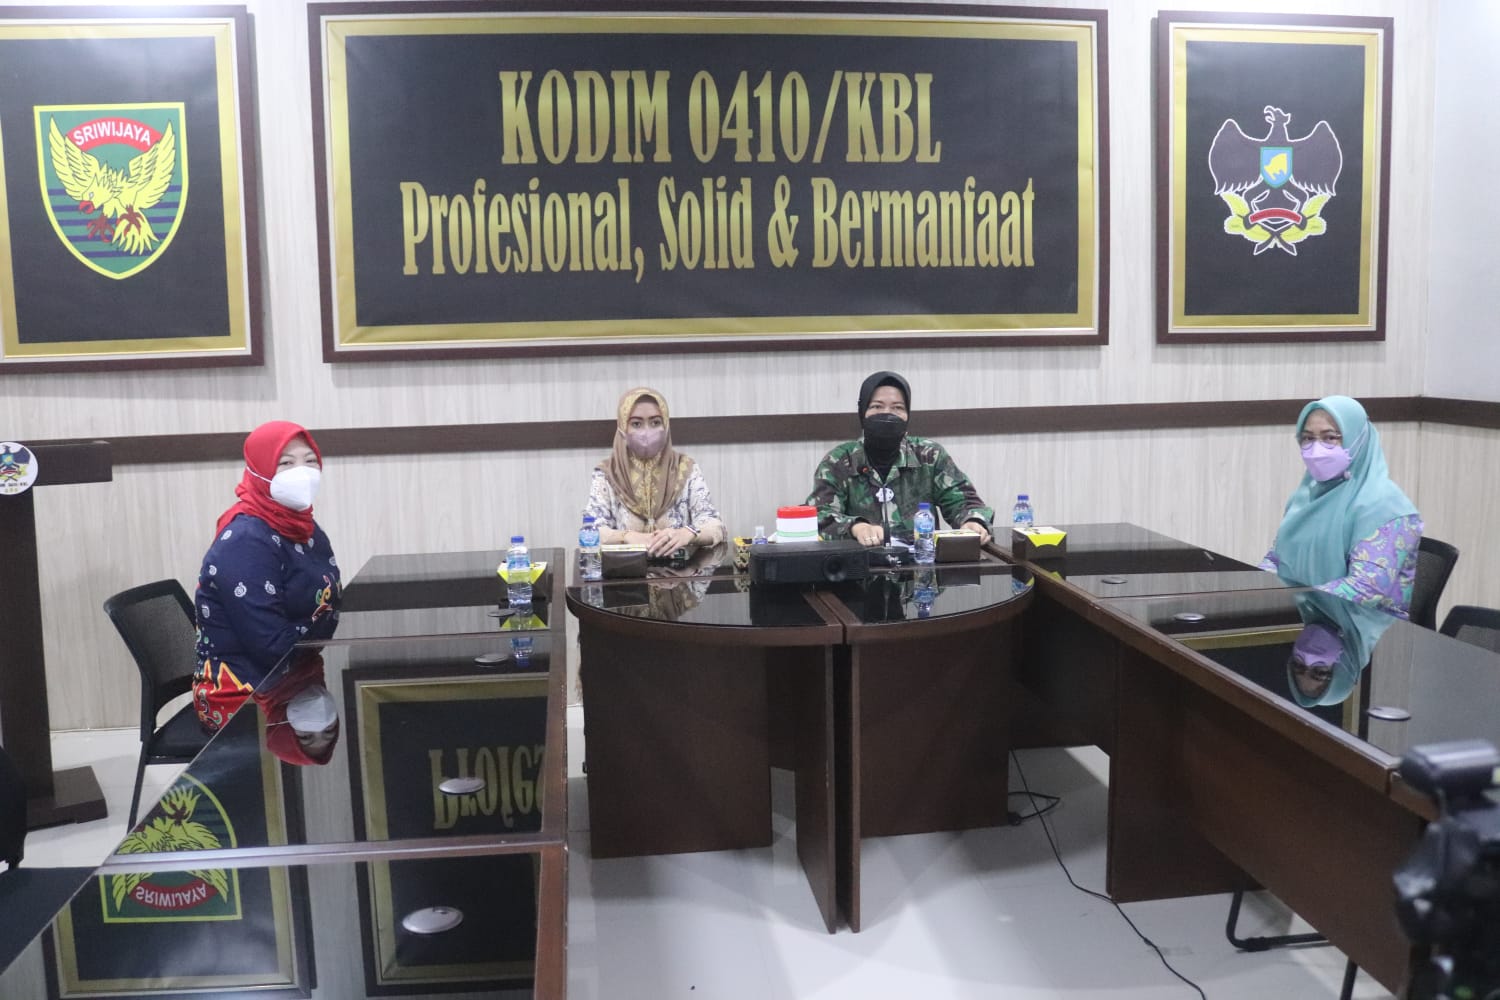 Pasi Pers Kodim 0410/KBL Dampingi Keluarga Latar Belakang Medis untuk Ikuti Sosialisasi Giat TNI AD